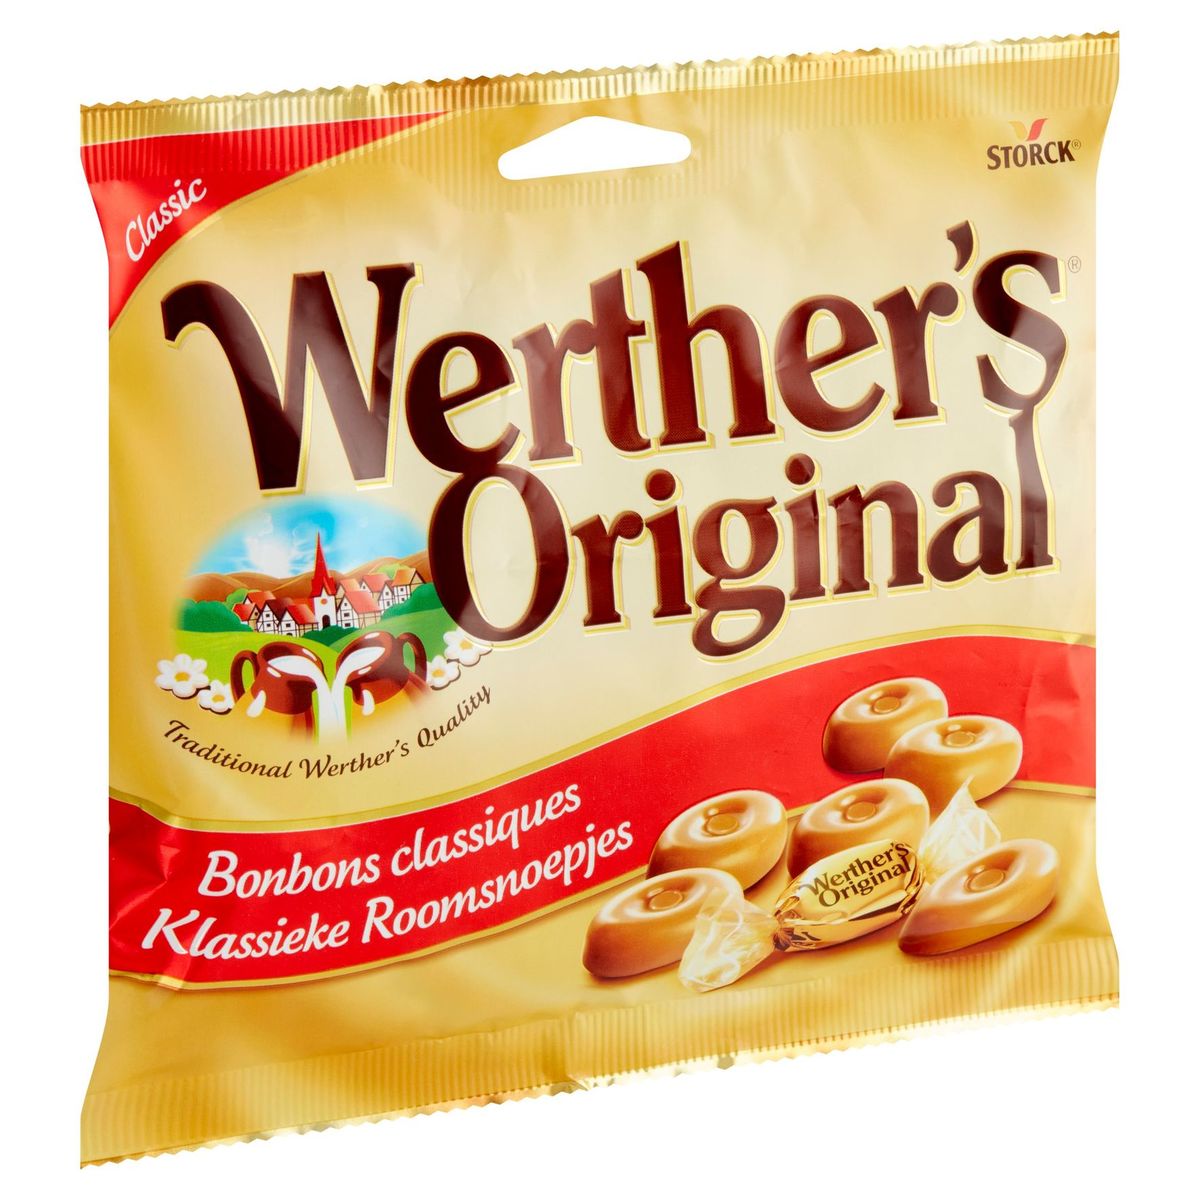 Werther's Original Bonbons Classiques 175 g